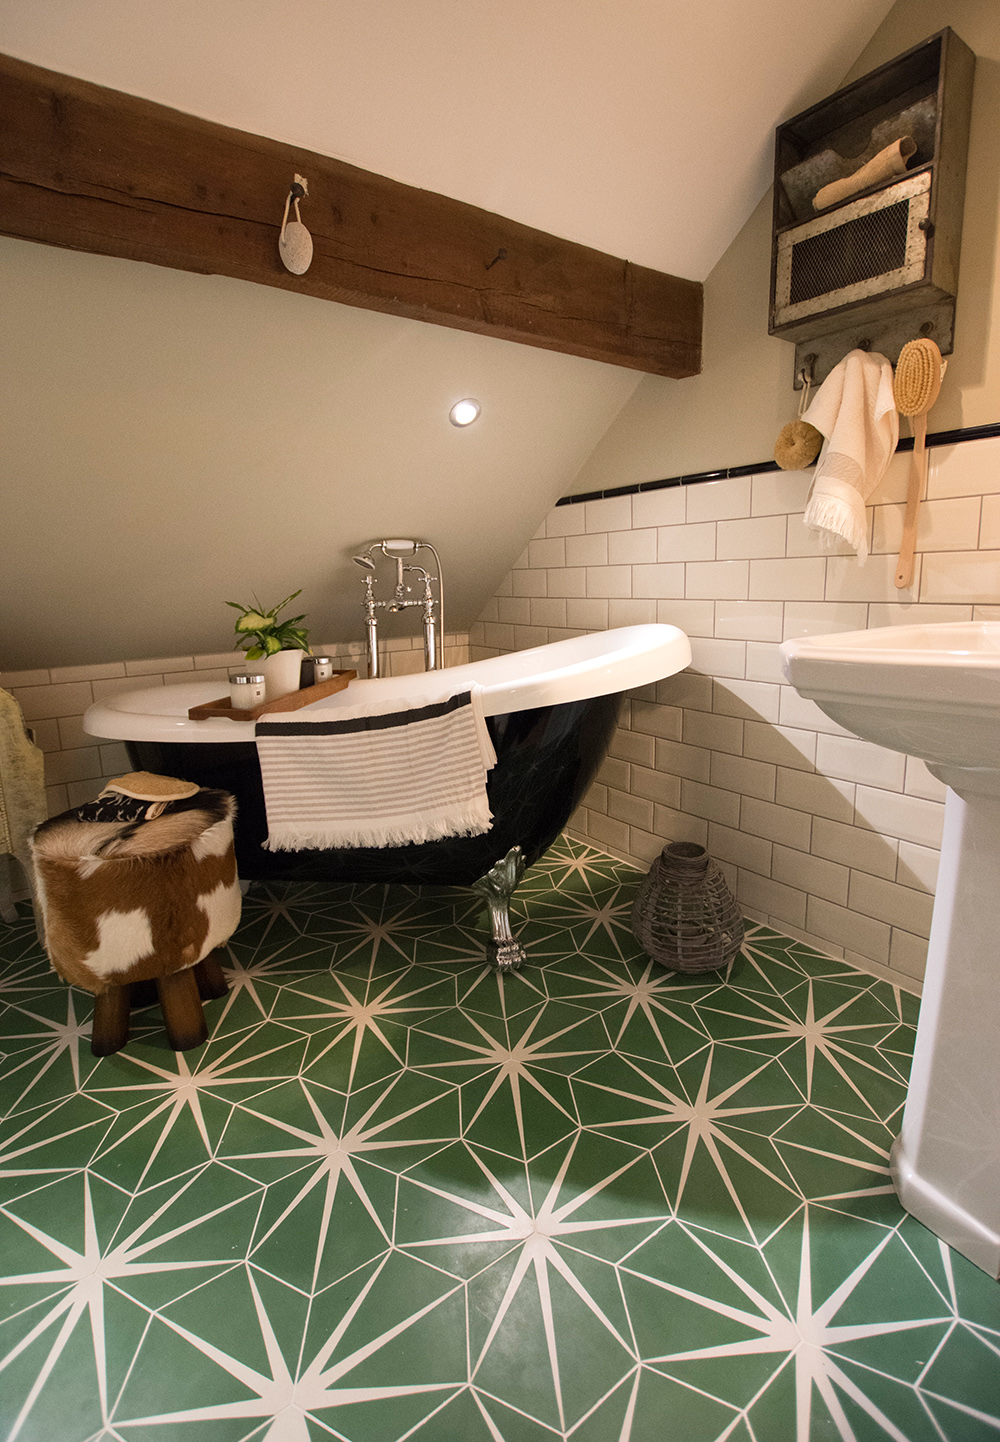 Nicola Broughton house tour - Beautiful bathroom decor with patterned green bathroom floor tiles